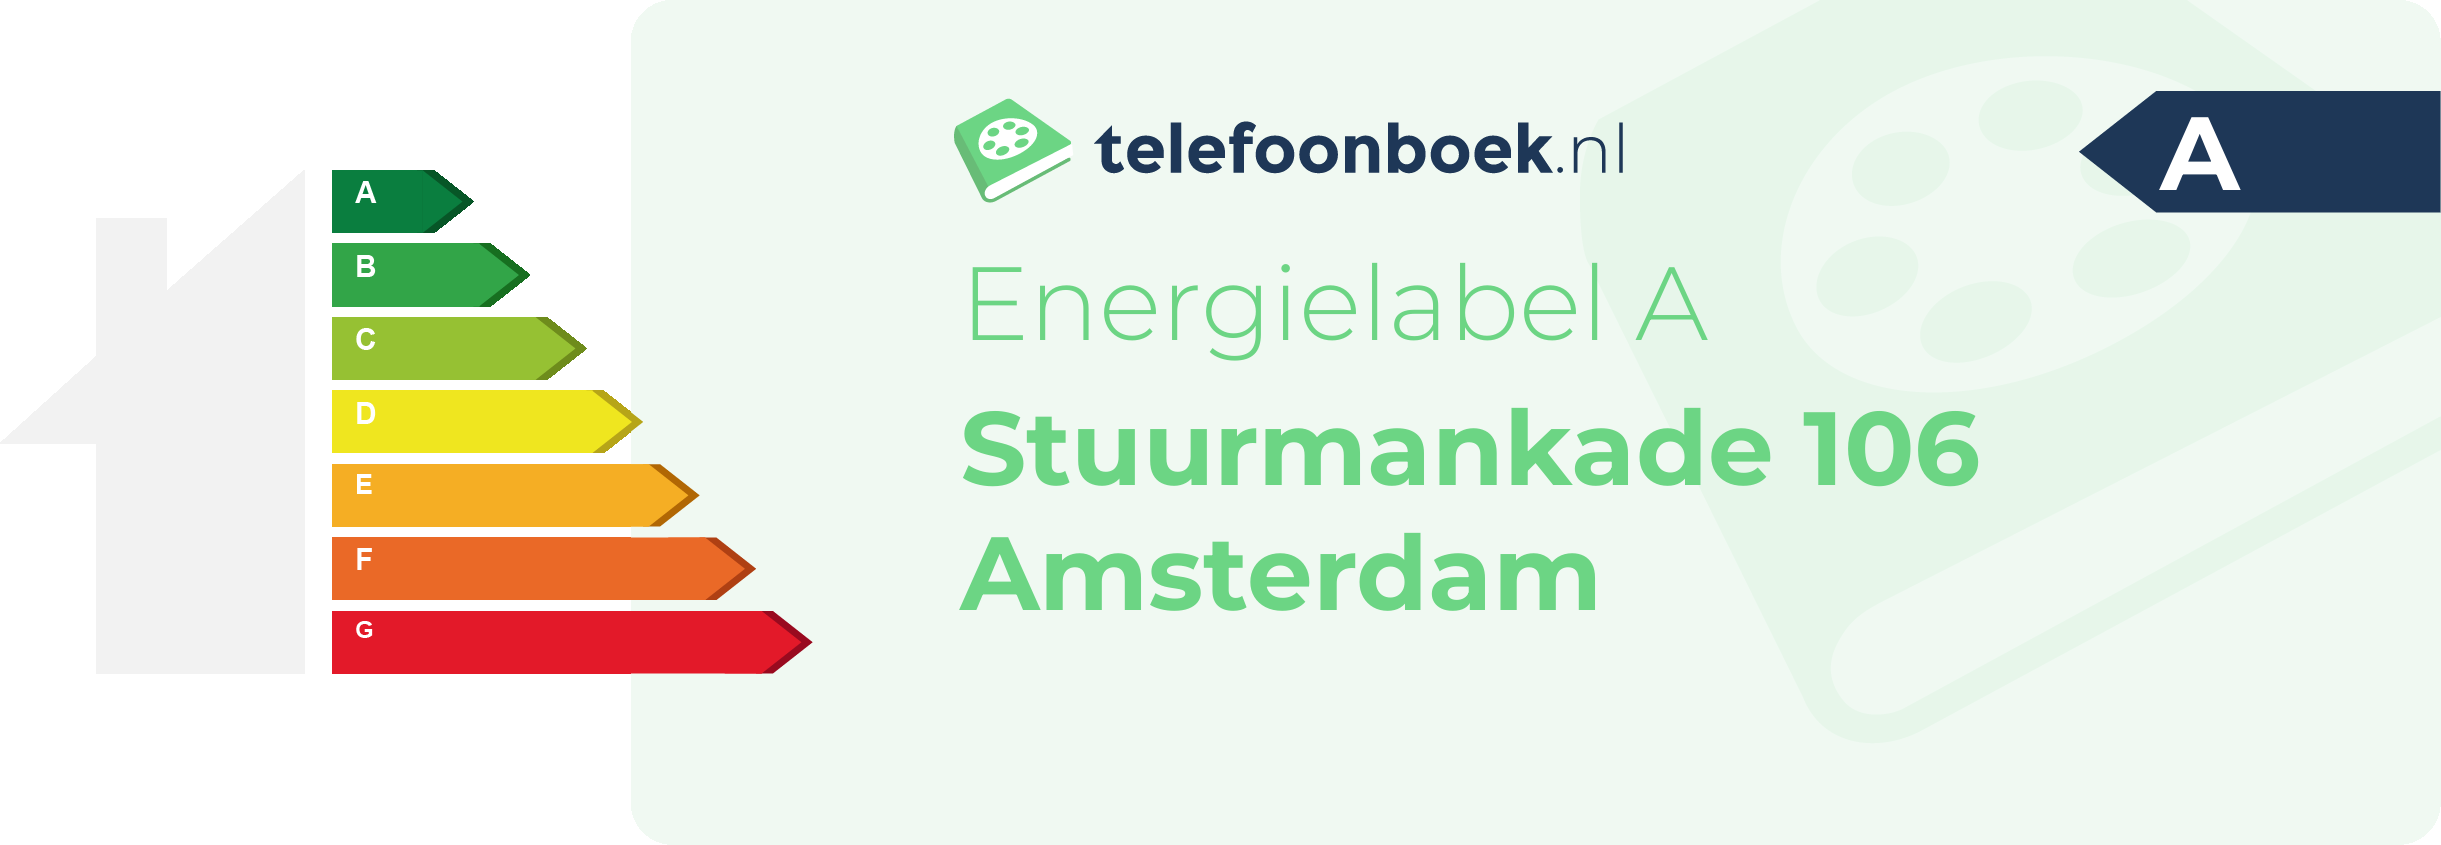 Energielabel Stuurmankade 106 Amsterdam